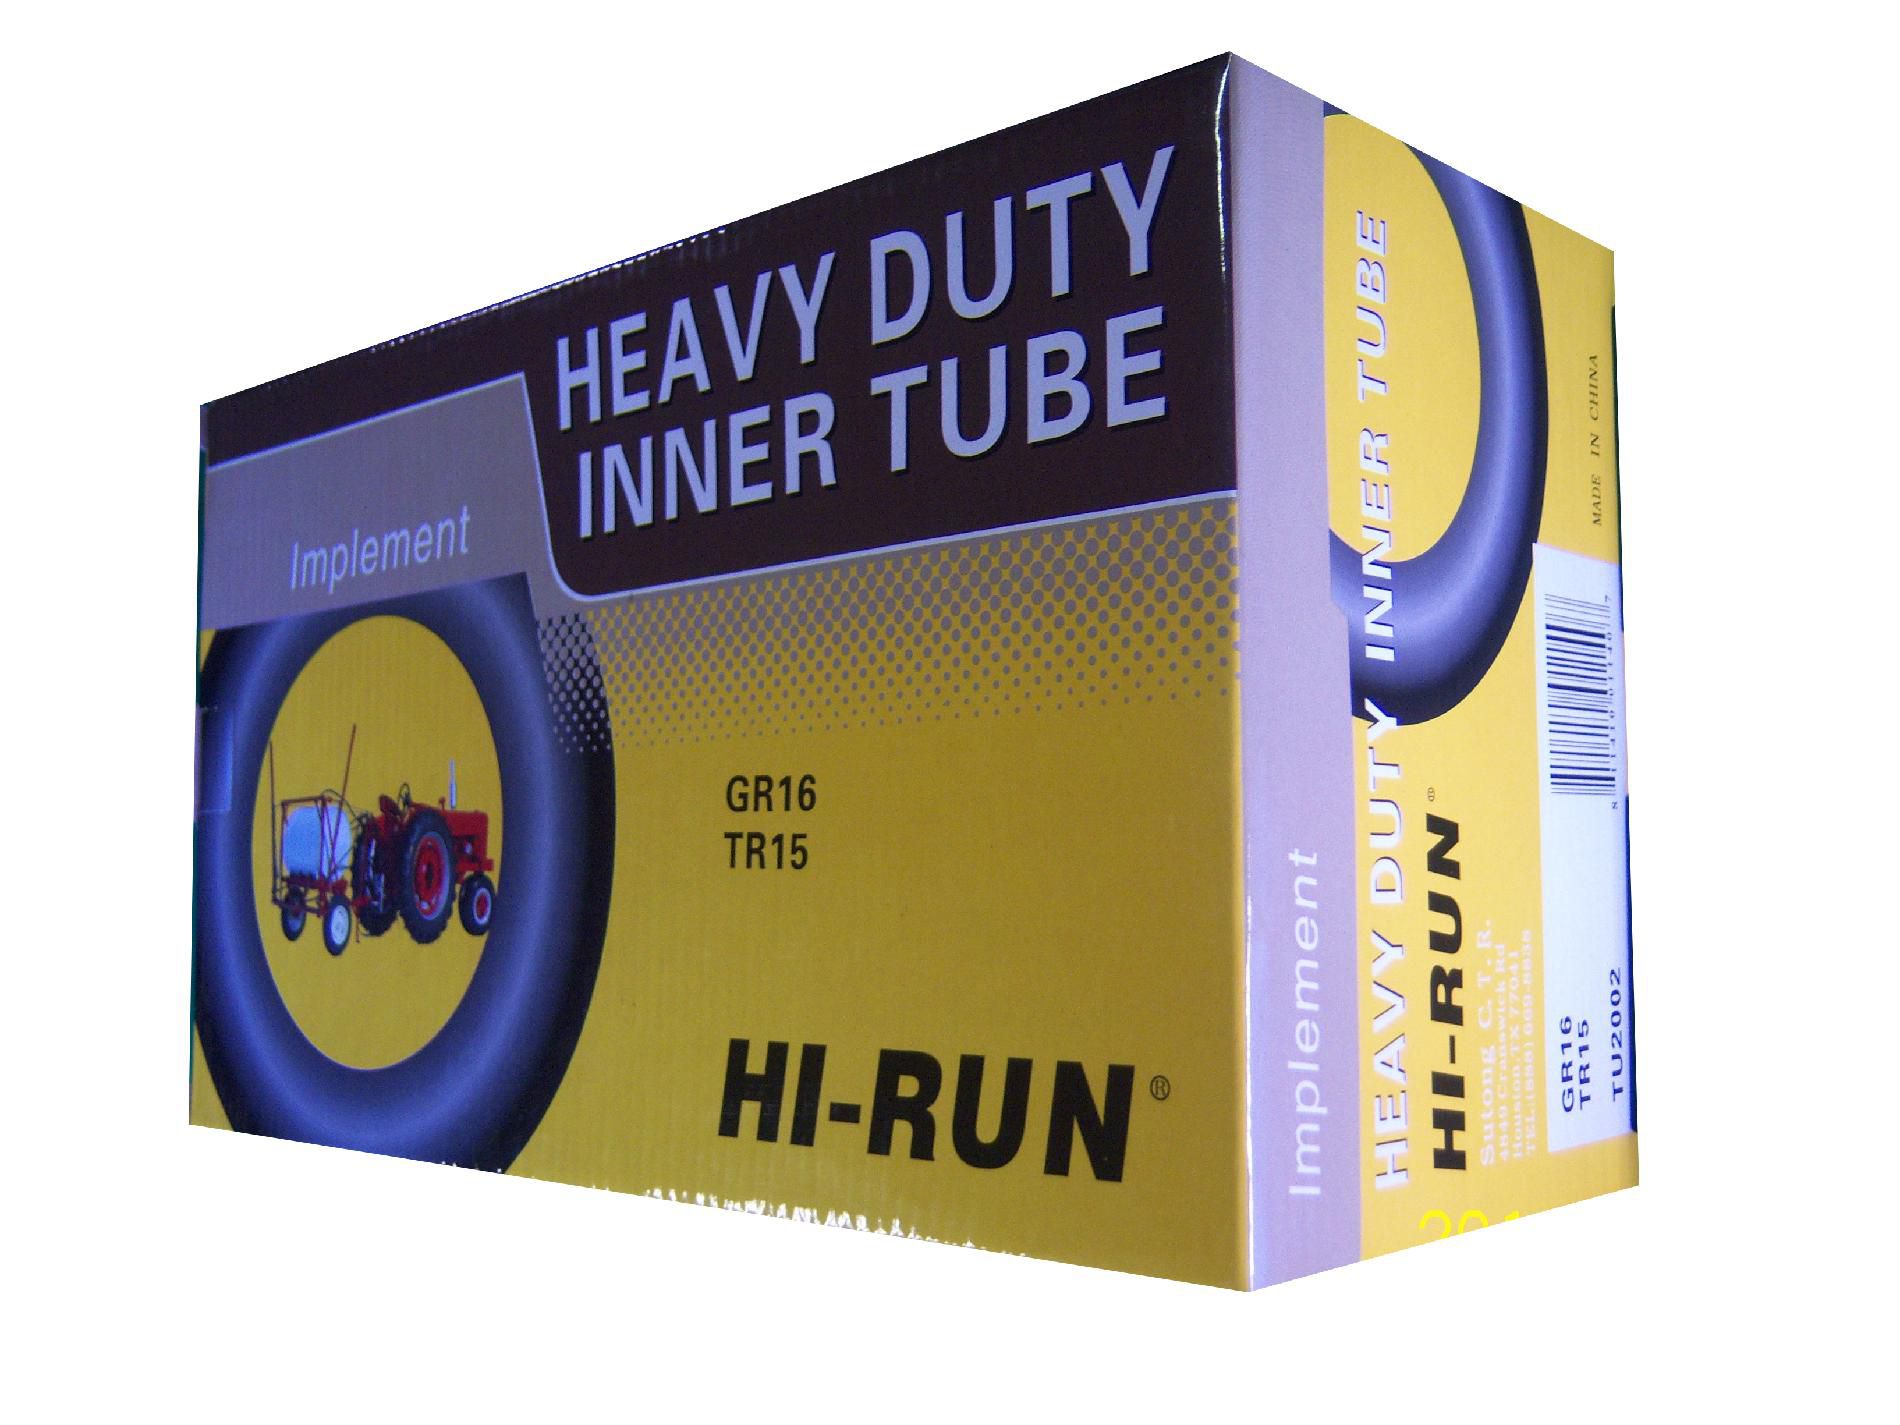 HI-RUN TUN2002 Implement Tire Tube Gr16